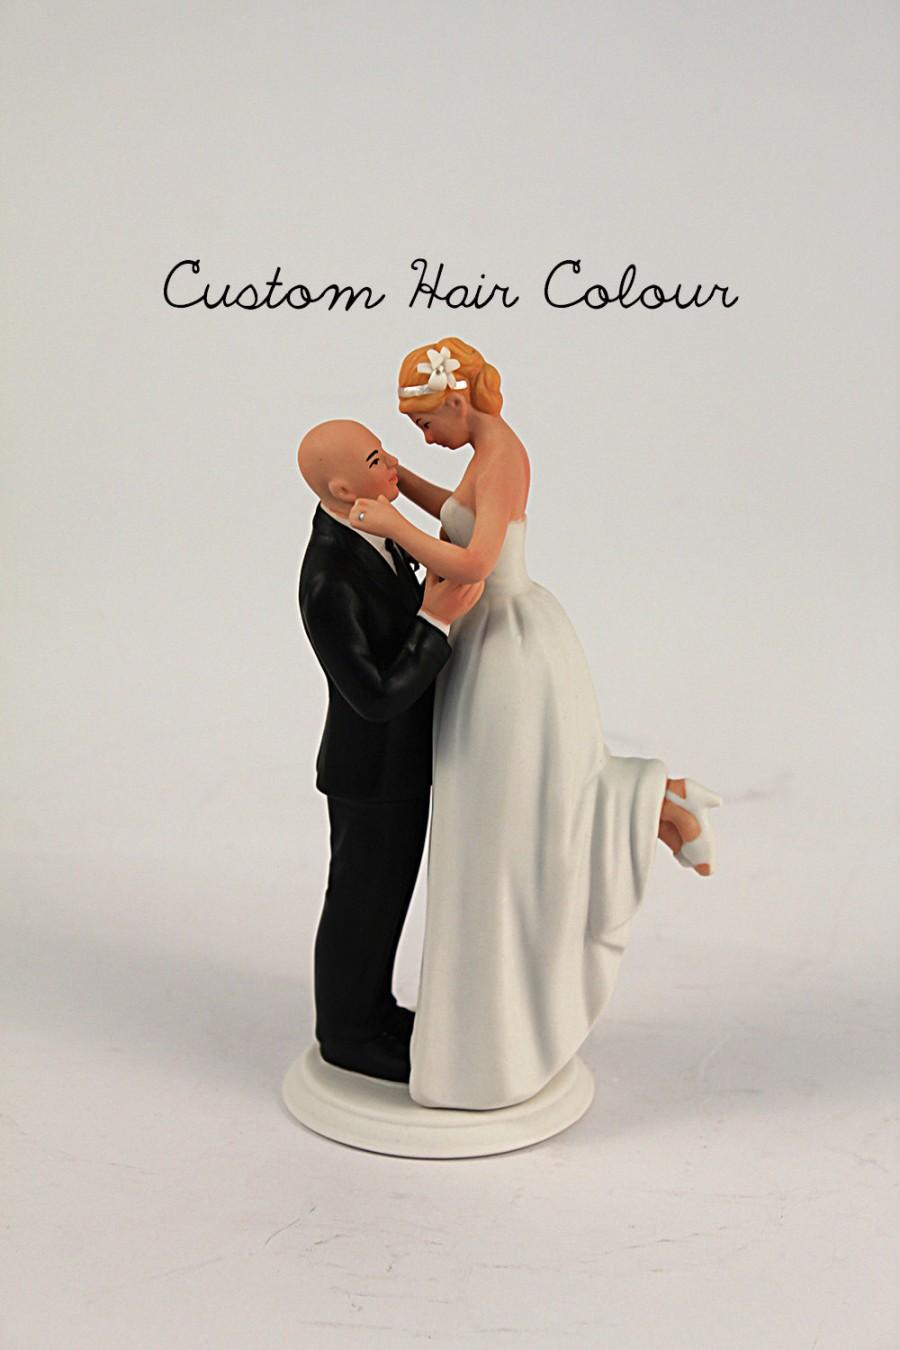 Mariage - True Romance Interlocking Bride and Groom Cake Topper - Medium Skin Tone Bald Groom and Light Skin Tone Bride - Personalized Wedding Toppers